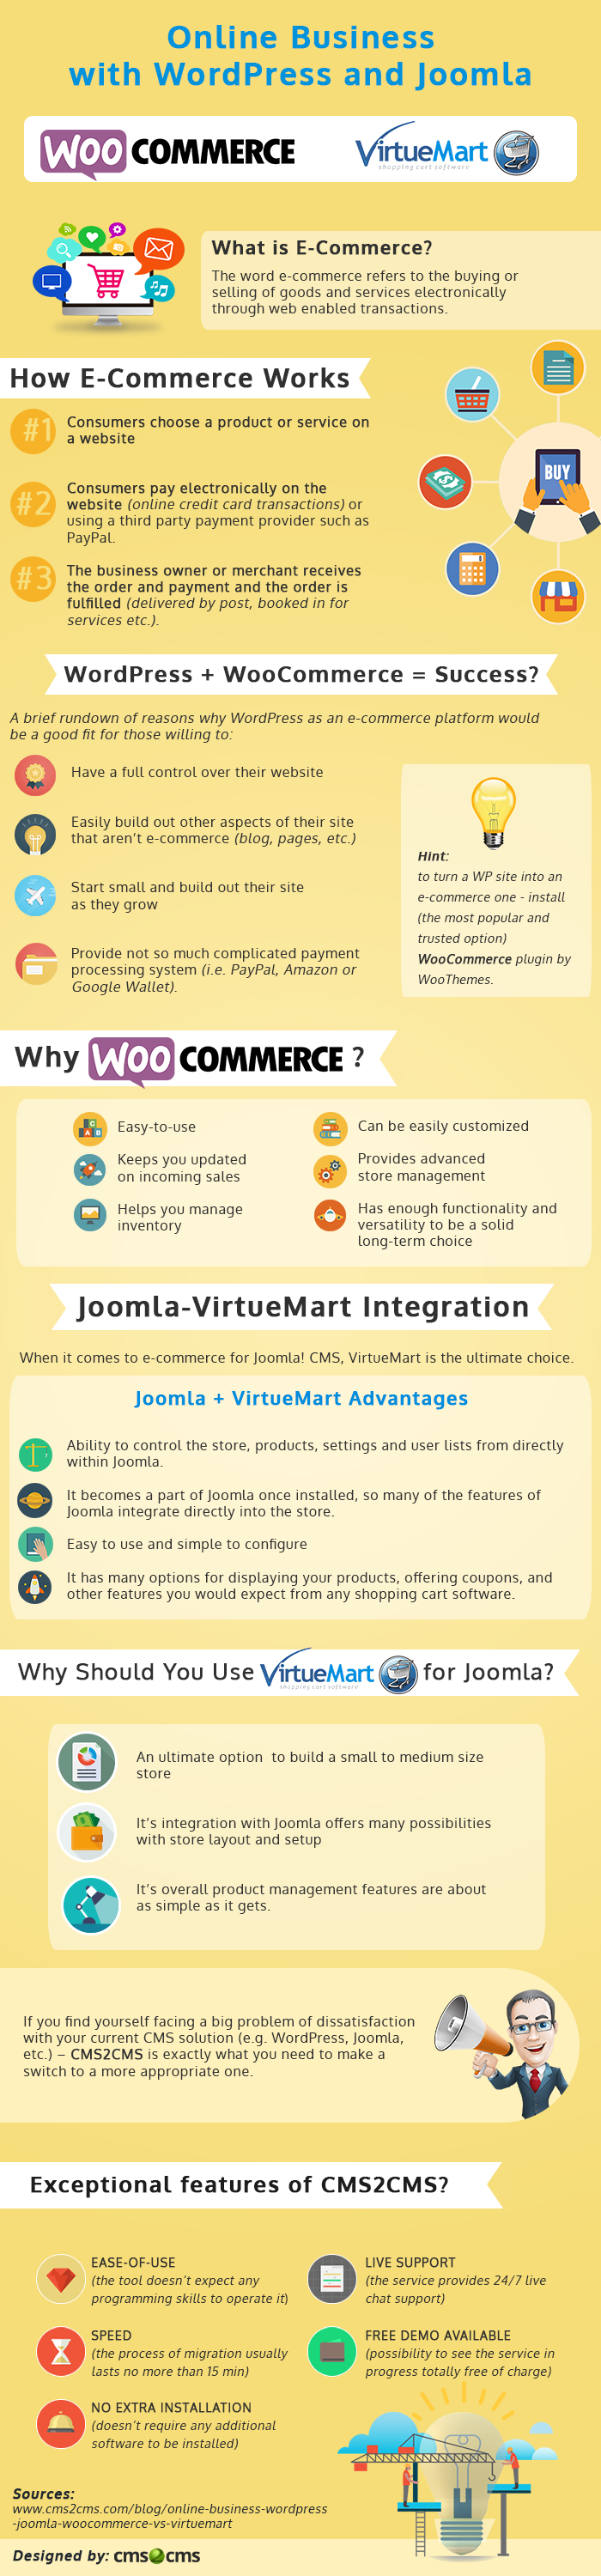 WordPress (WooCommerce) Vs. Joomla! (VirtueMart) 